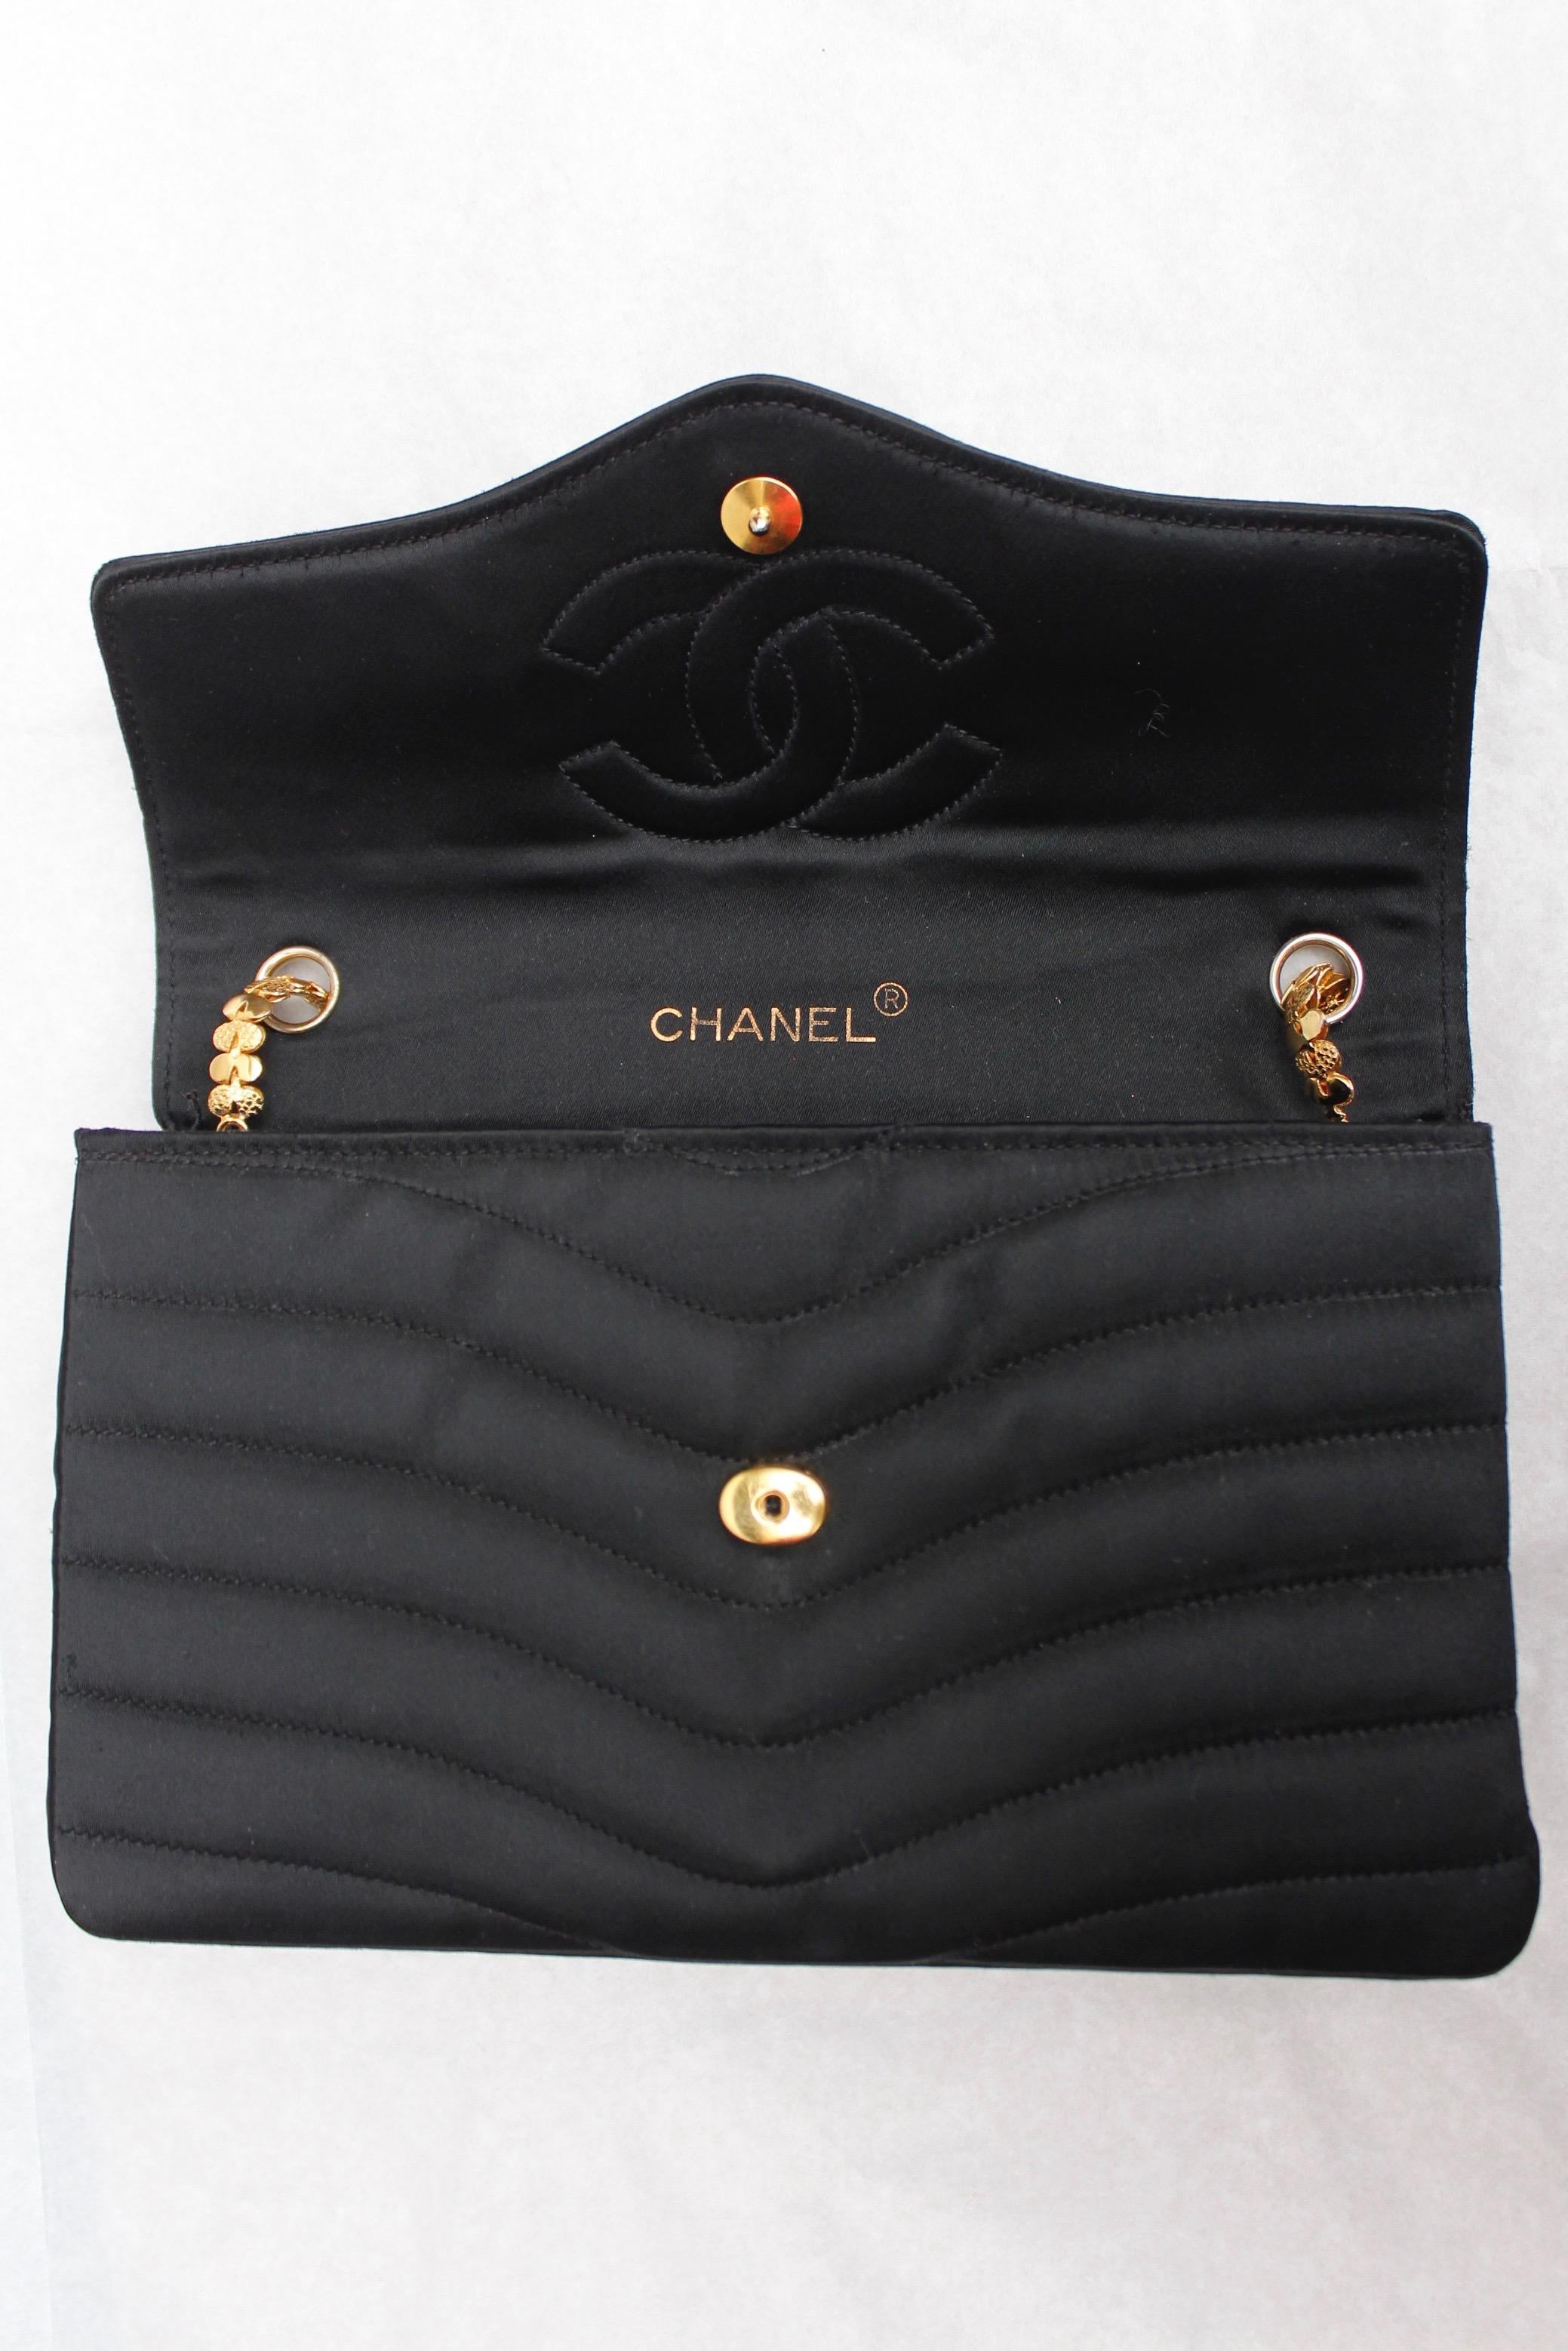 Women's Chanel elegant evening jewel bag in black satin For Sale